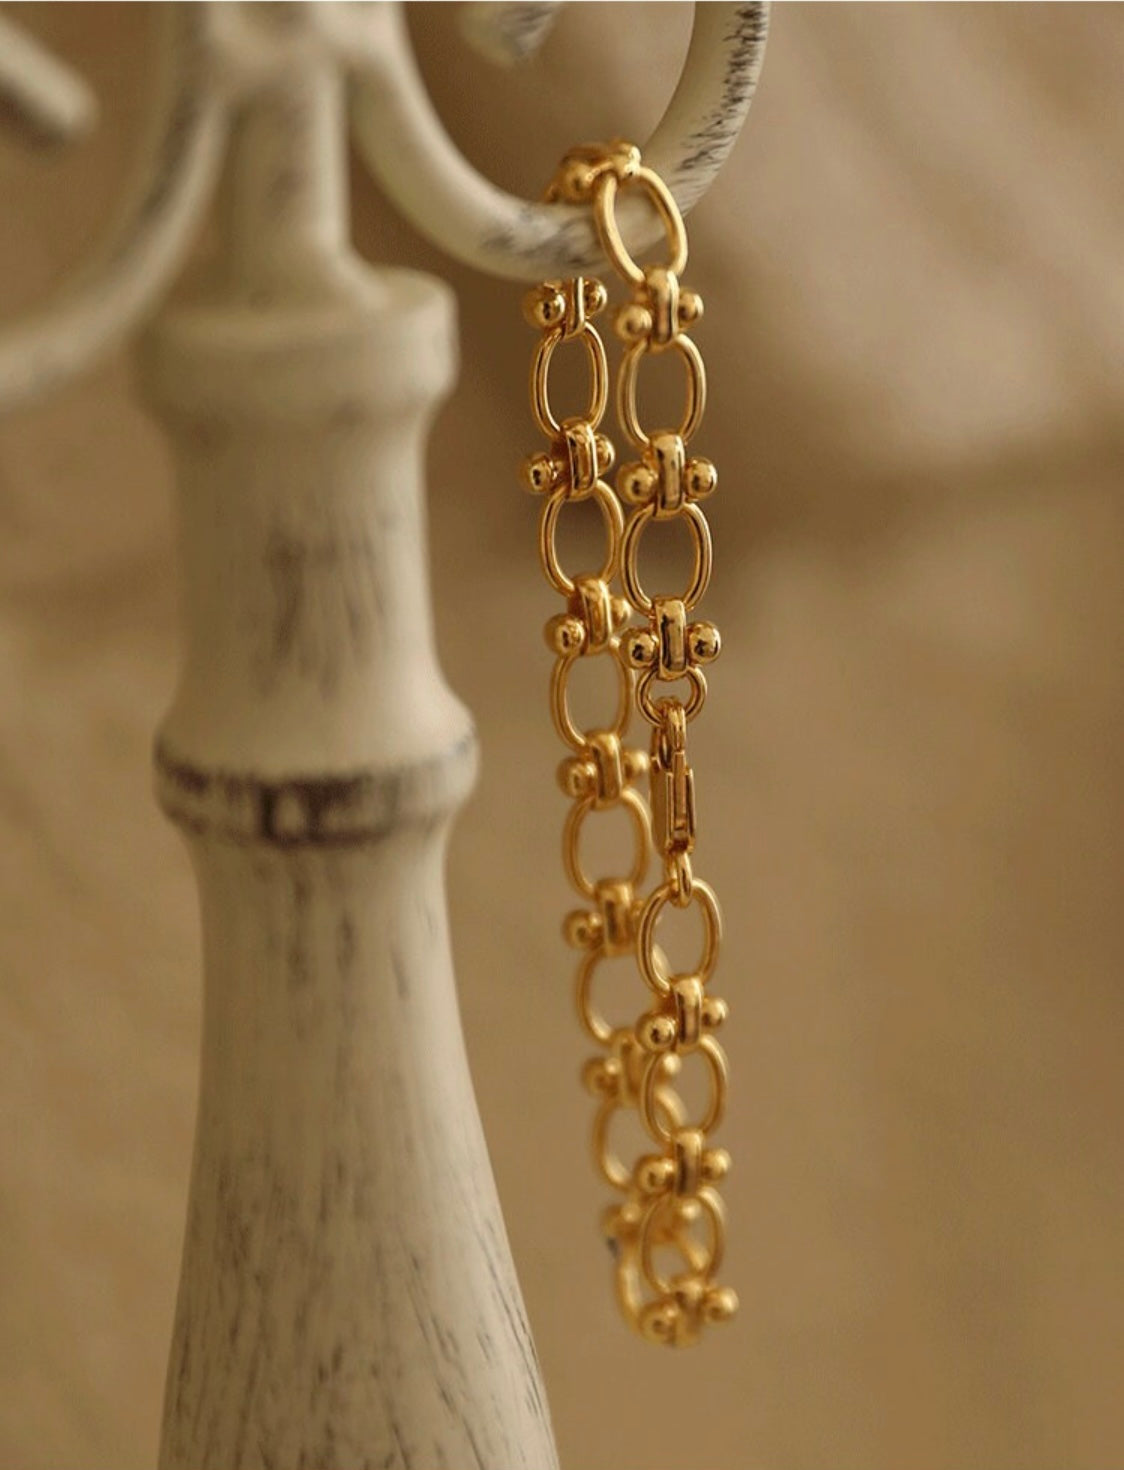 Minimalist Gold Bracelet